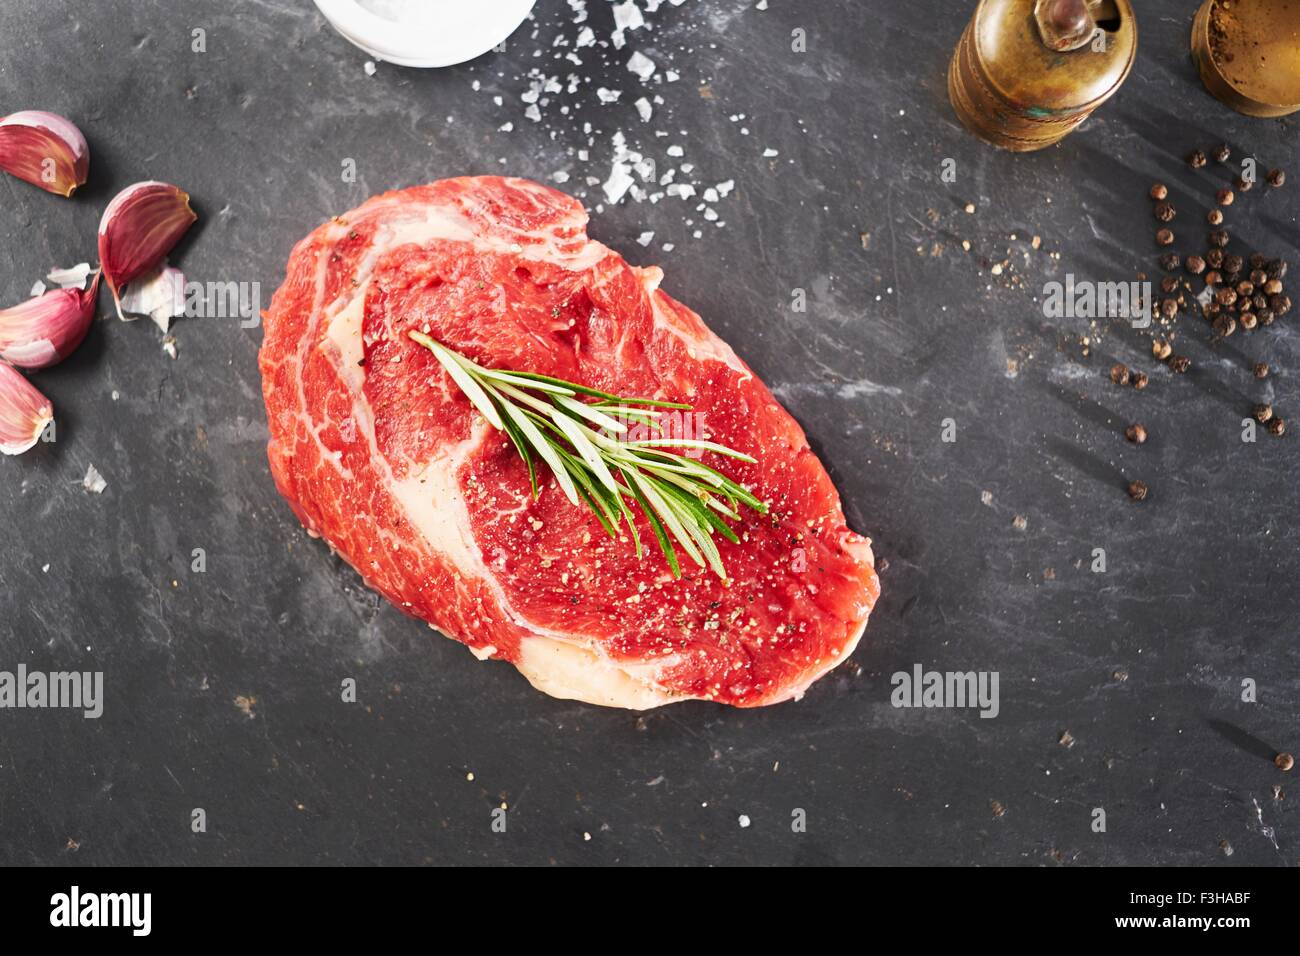 Sirloin steak, uncooked, close-up Stock Photo